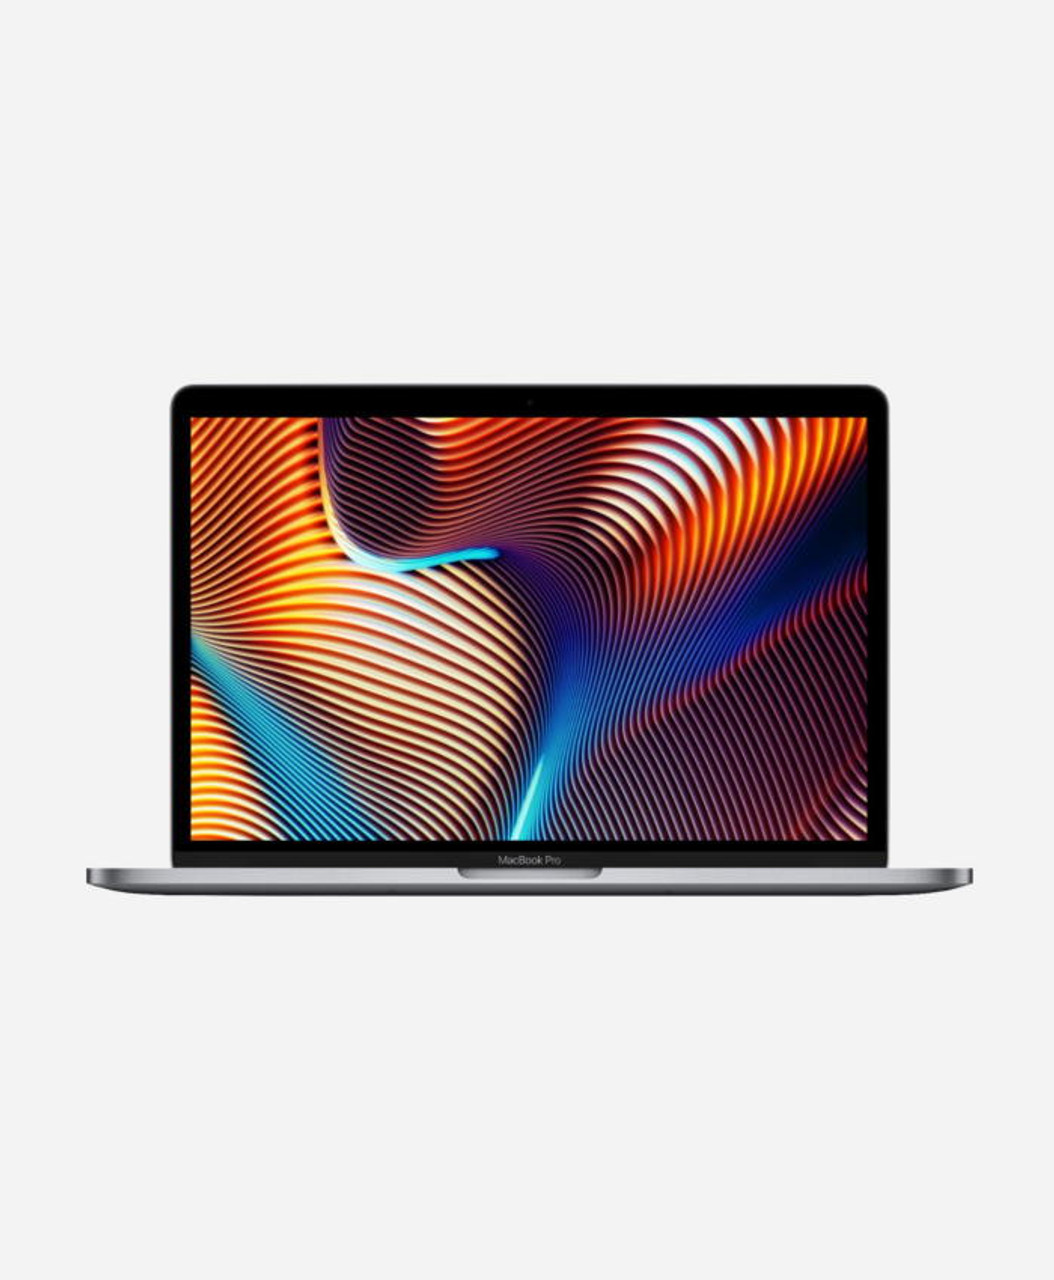 Geduld Onenigheid toelage Used Apple Macbook Pro 13.3-inch (Retina, Space Gray, Touch Bar) 1.4Ghz  Quad Core i5 (2019) MUHN2LL/A - GainSaver